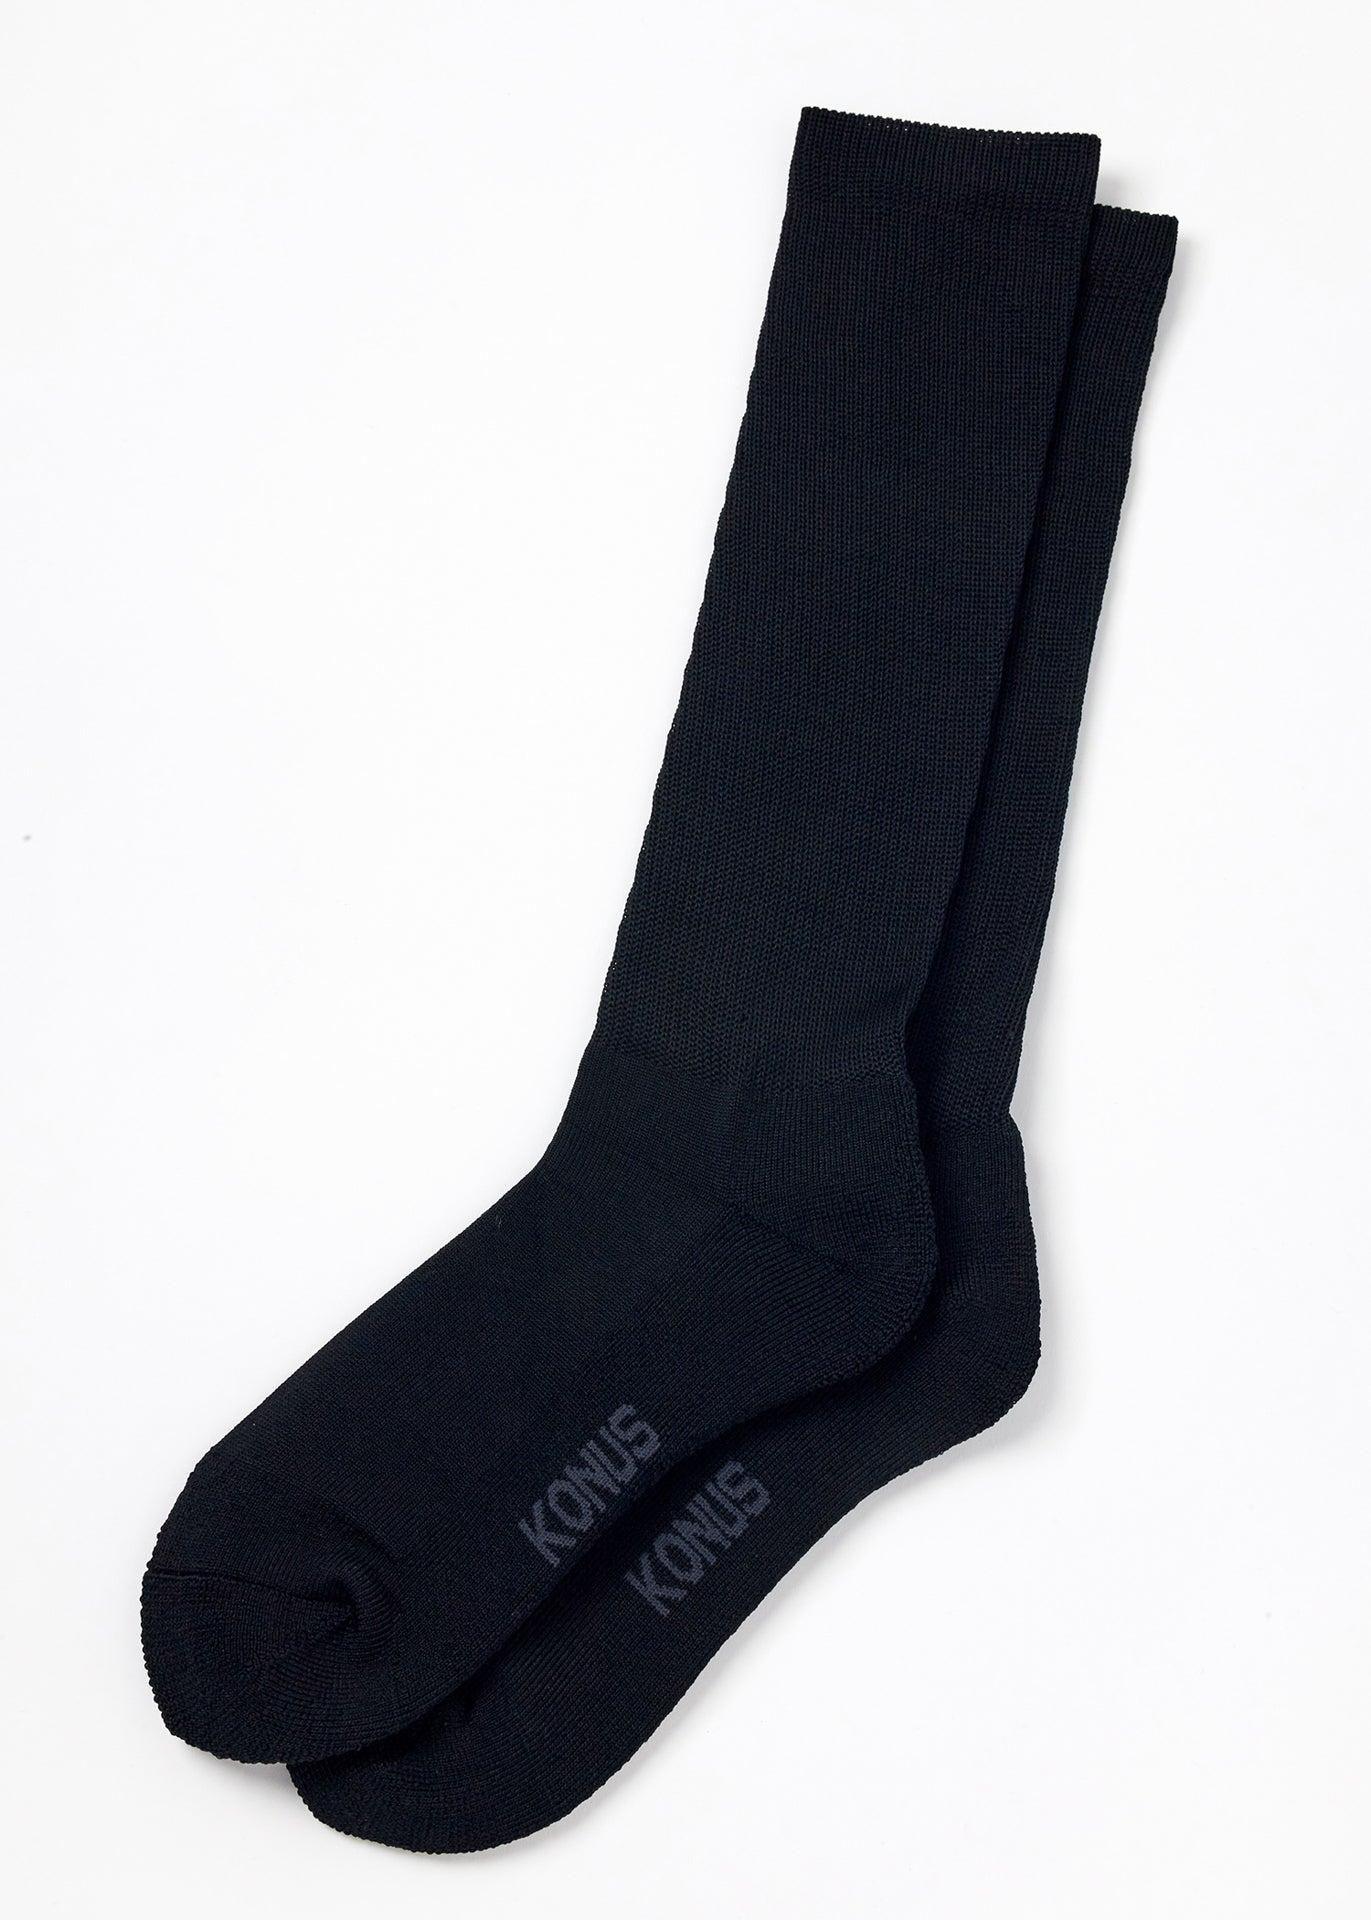 Eco Friendly Reolite Tech Sock in Black by Konus Brand by Shop at Konus